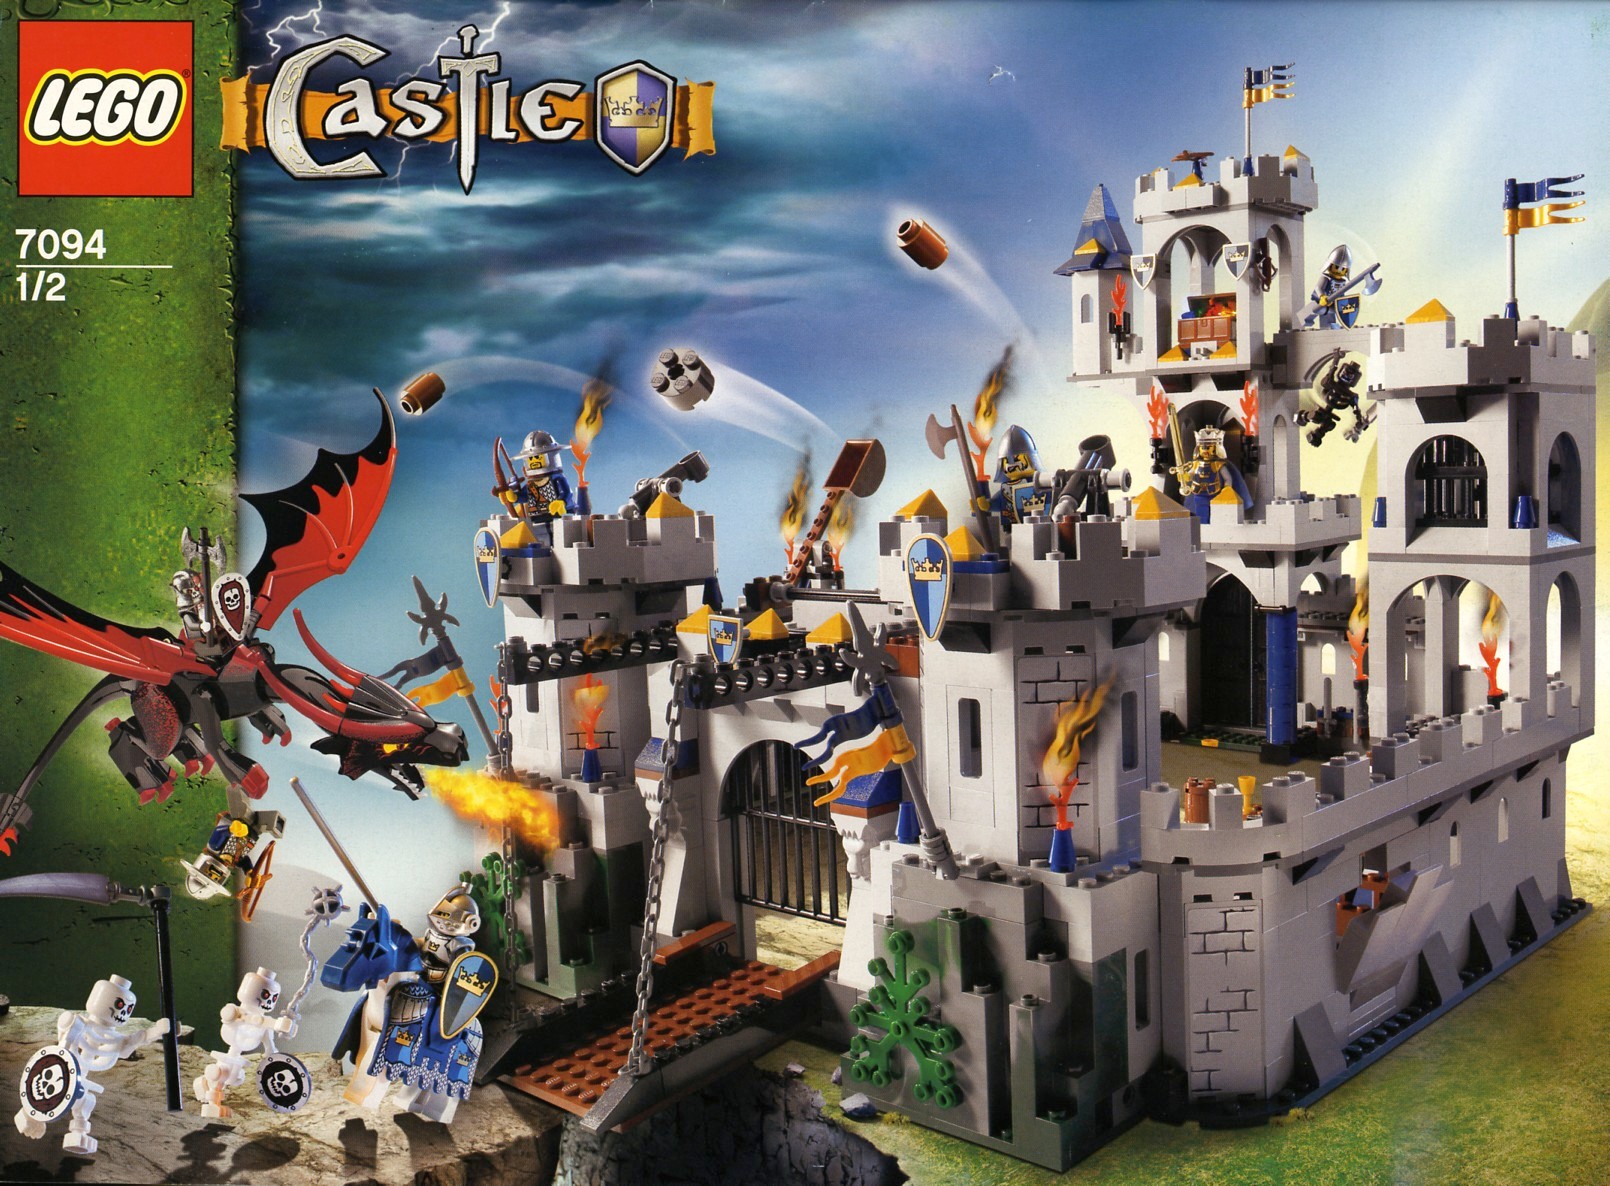 Castle | Fantasy Era | Brickset: LEGO 